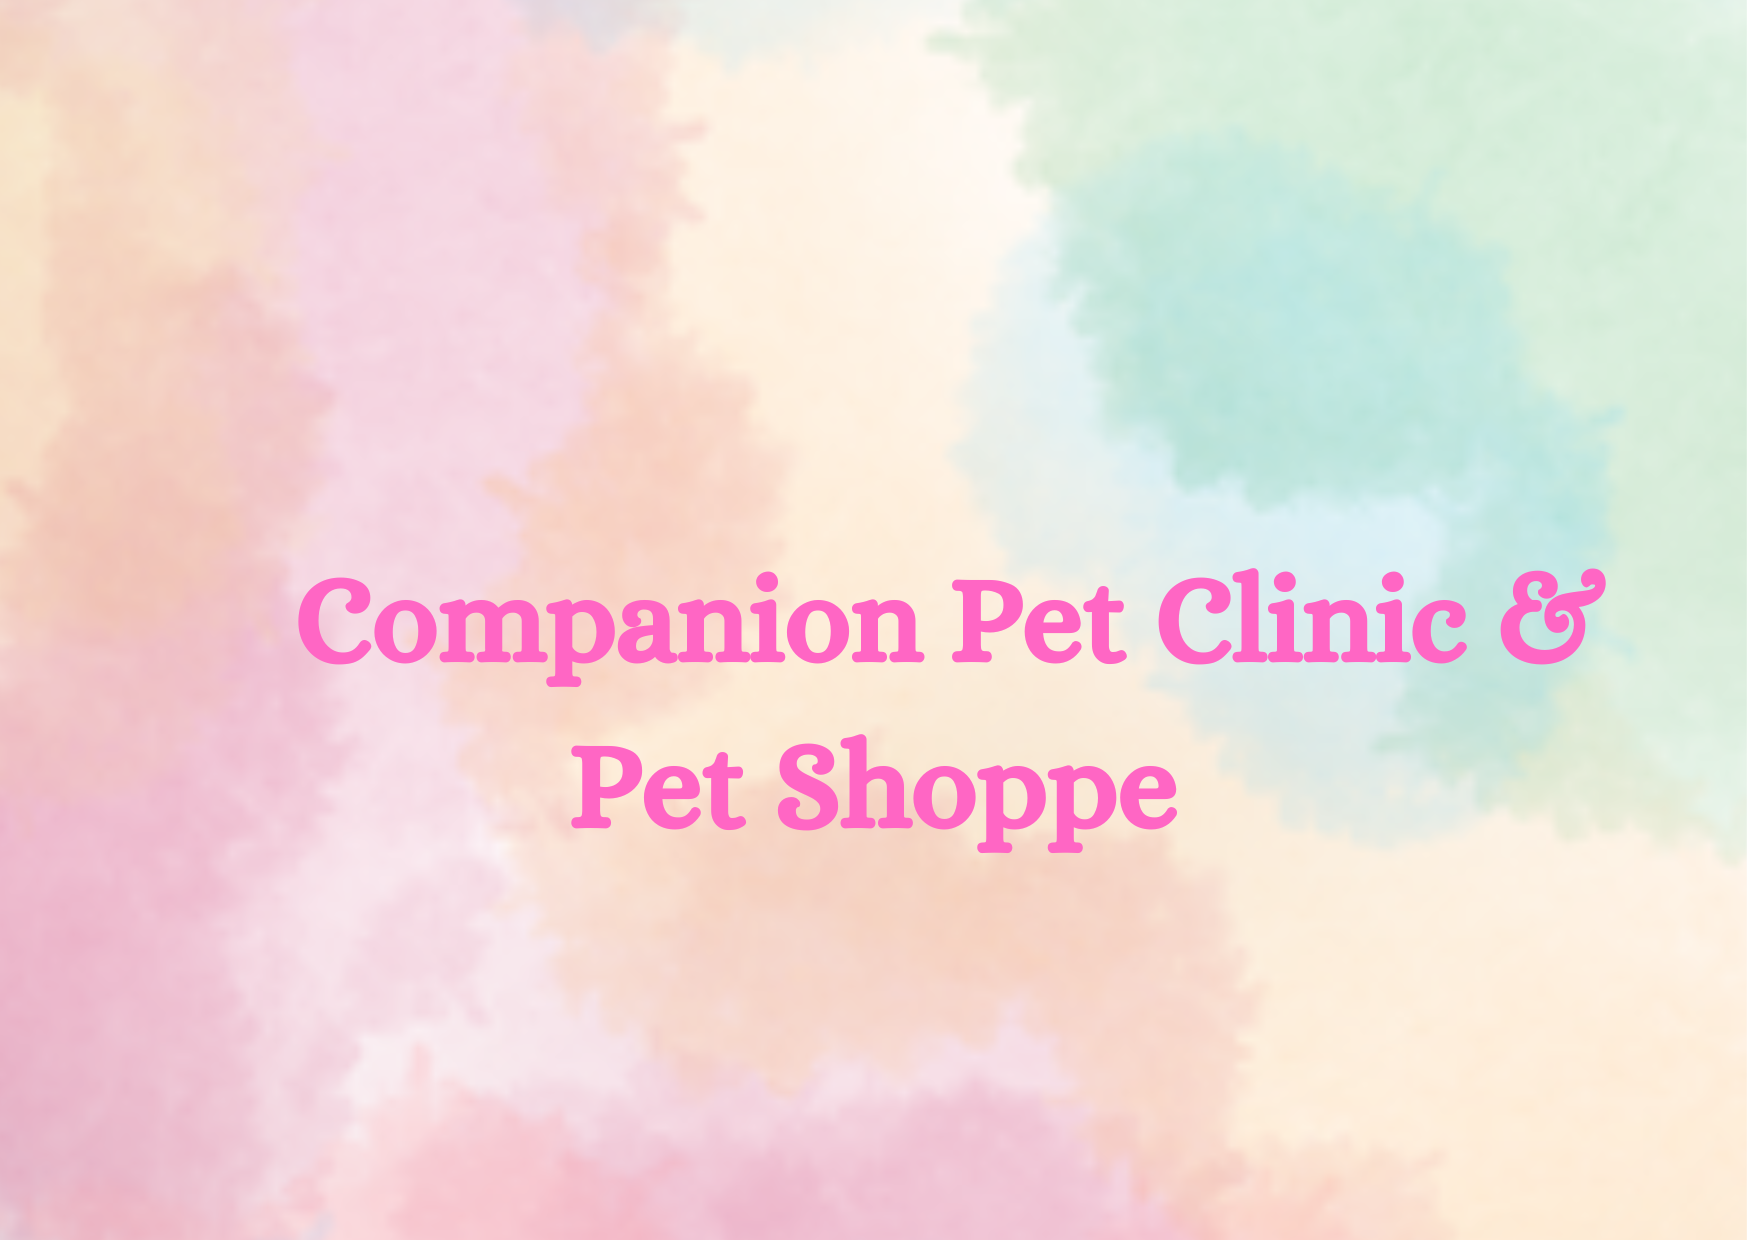 Companion Pet Clinic & Pet Shoppe,   